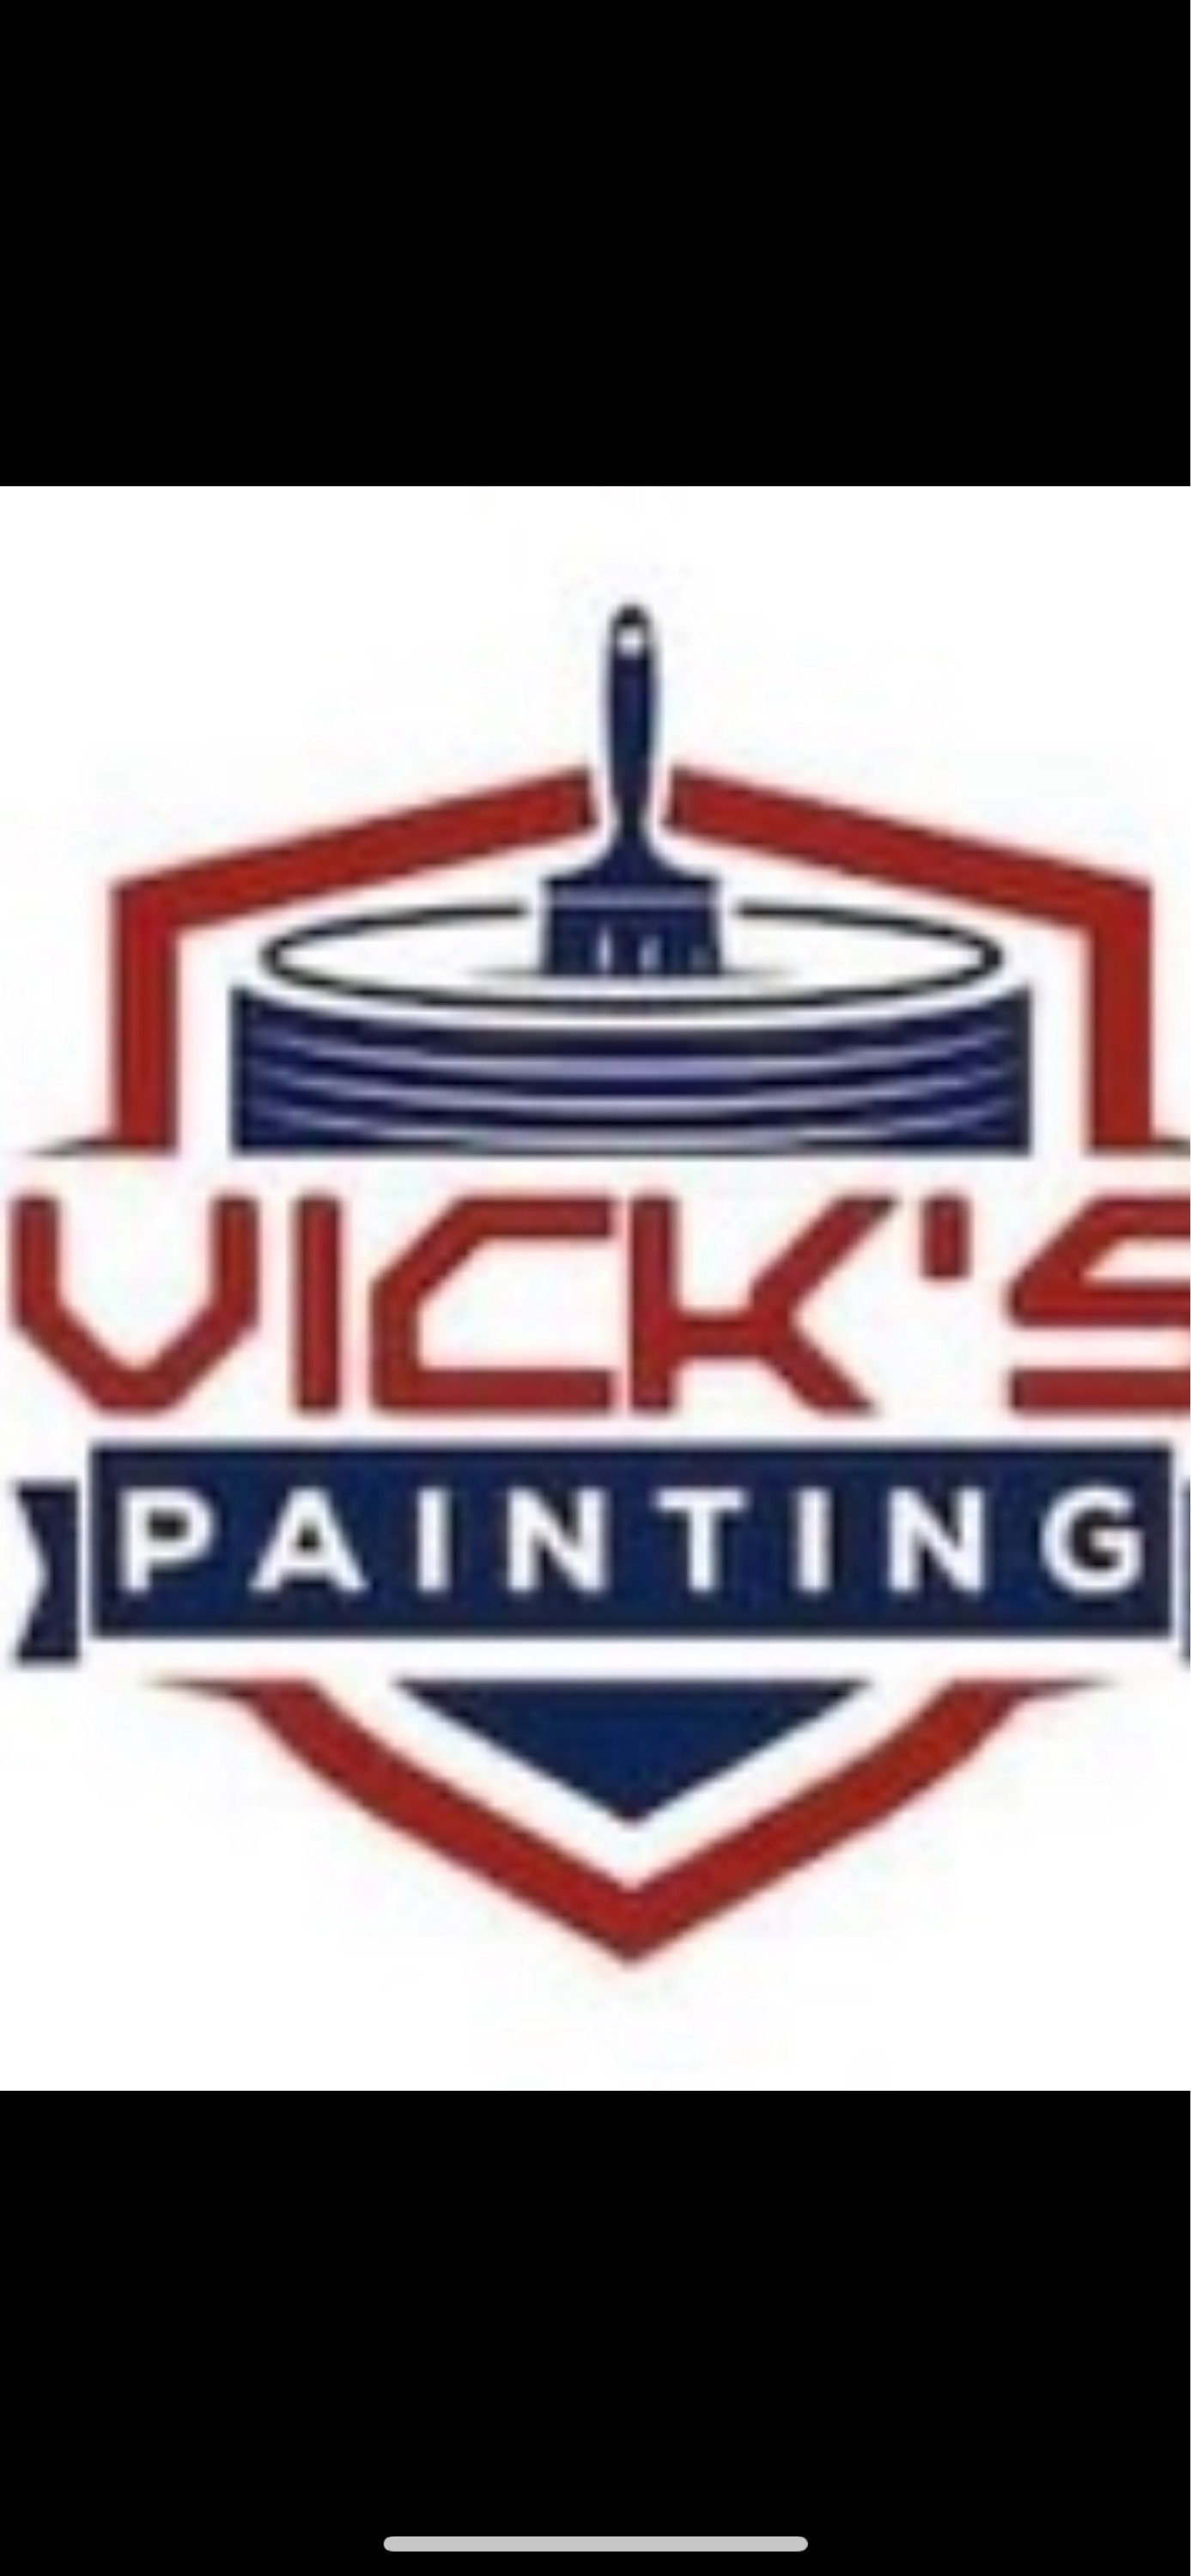 Vick's Painting Logo